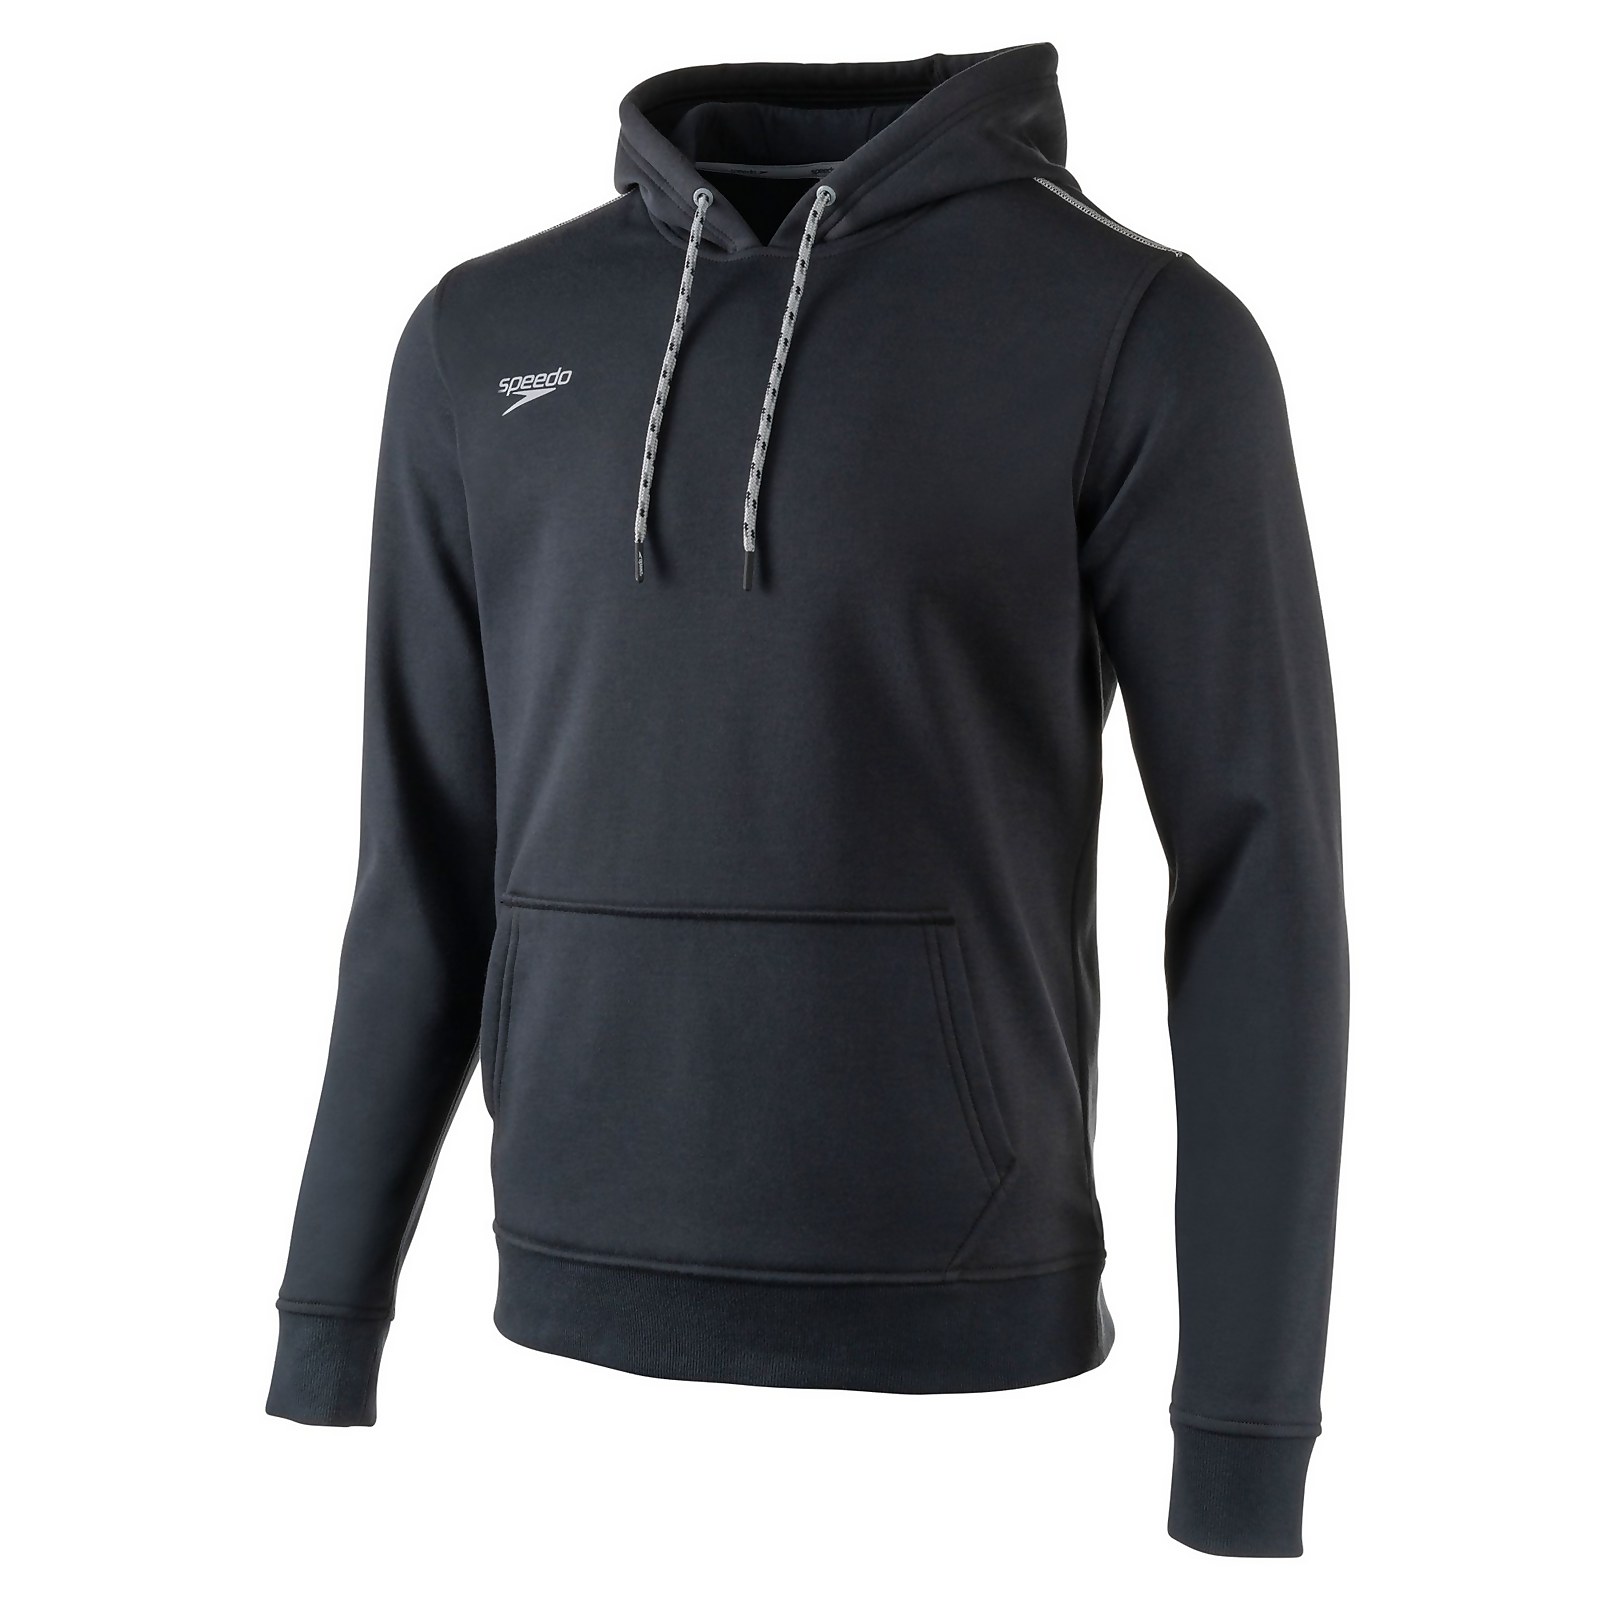 Speedo  Long Sleeve Hooded Sweatshirt - 3S    : Black